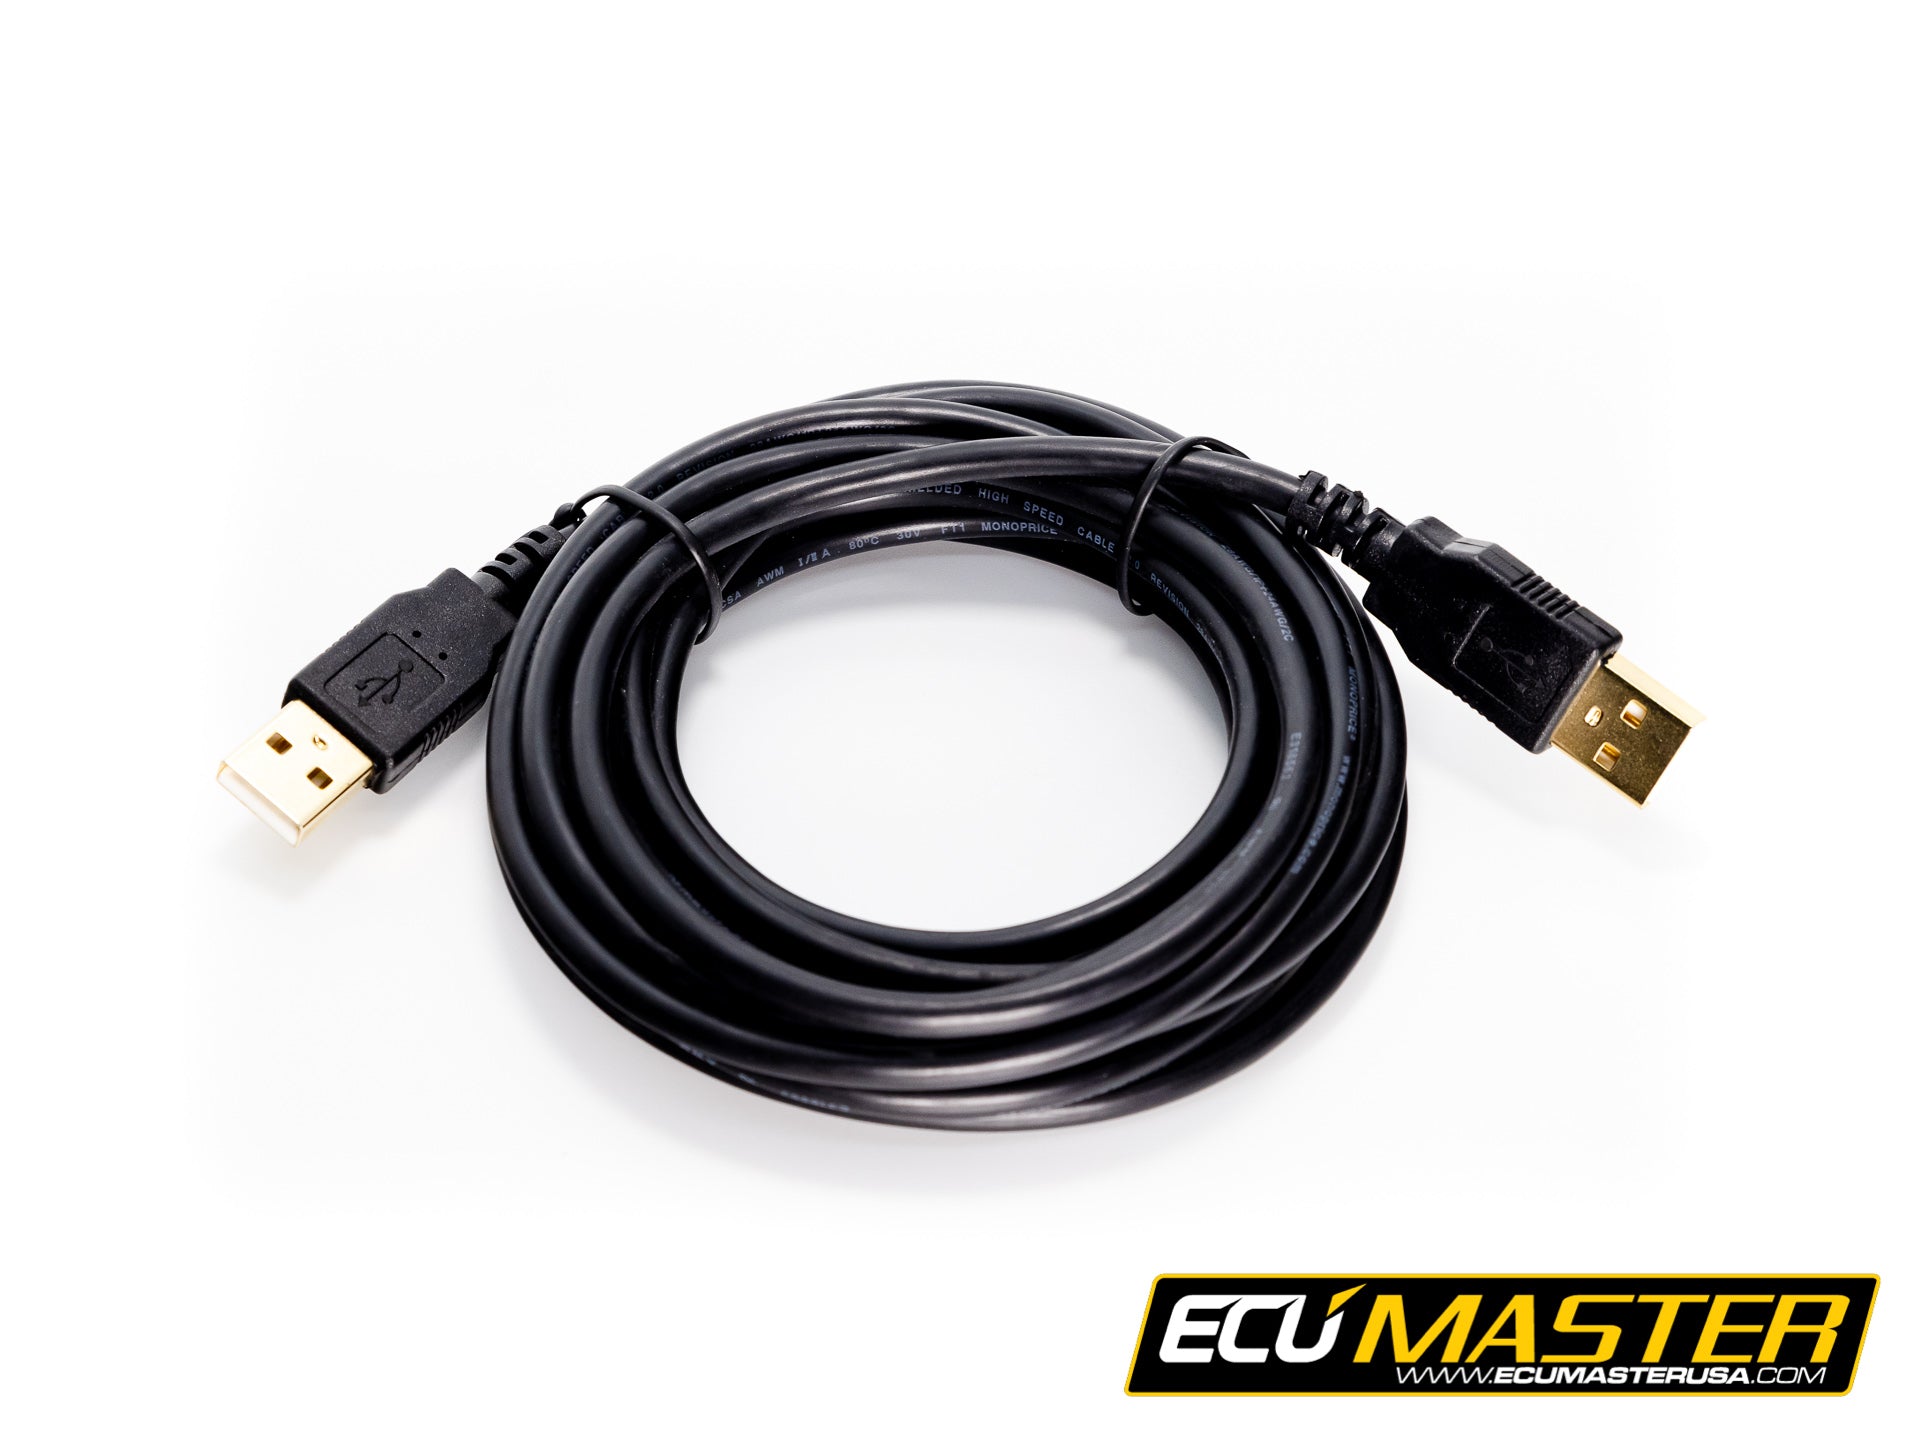 lezing morfine inhoudsopgave EMU CLASSIC USB A TO USB A Male-Male Cable – ECUMaster USA